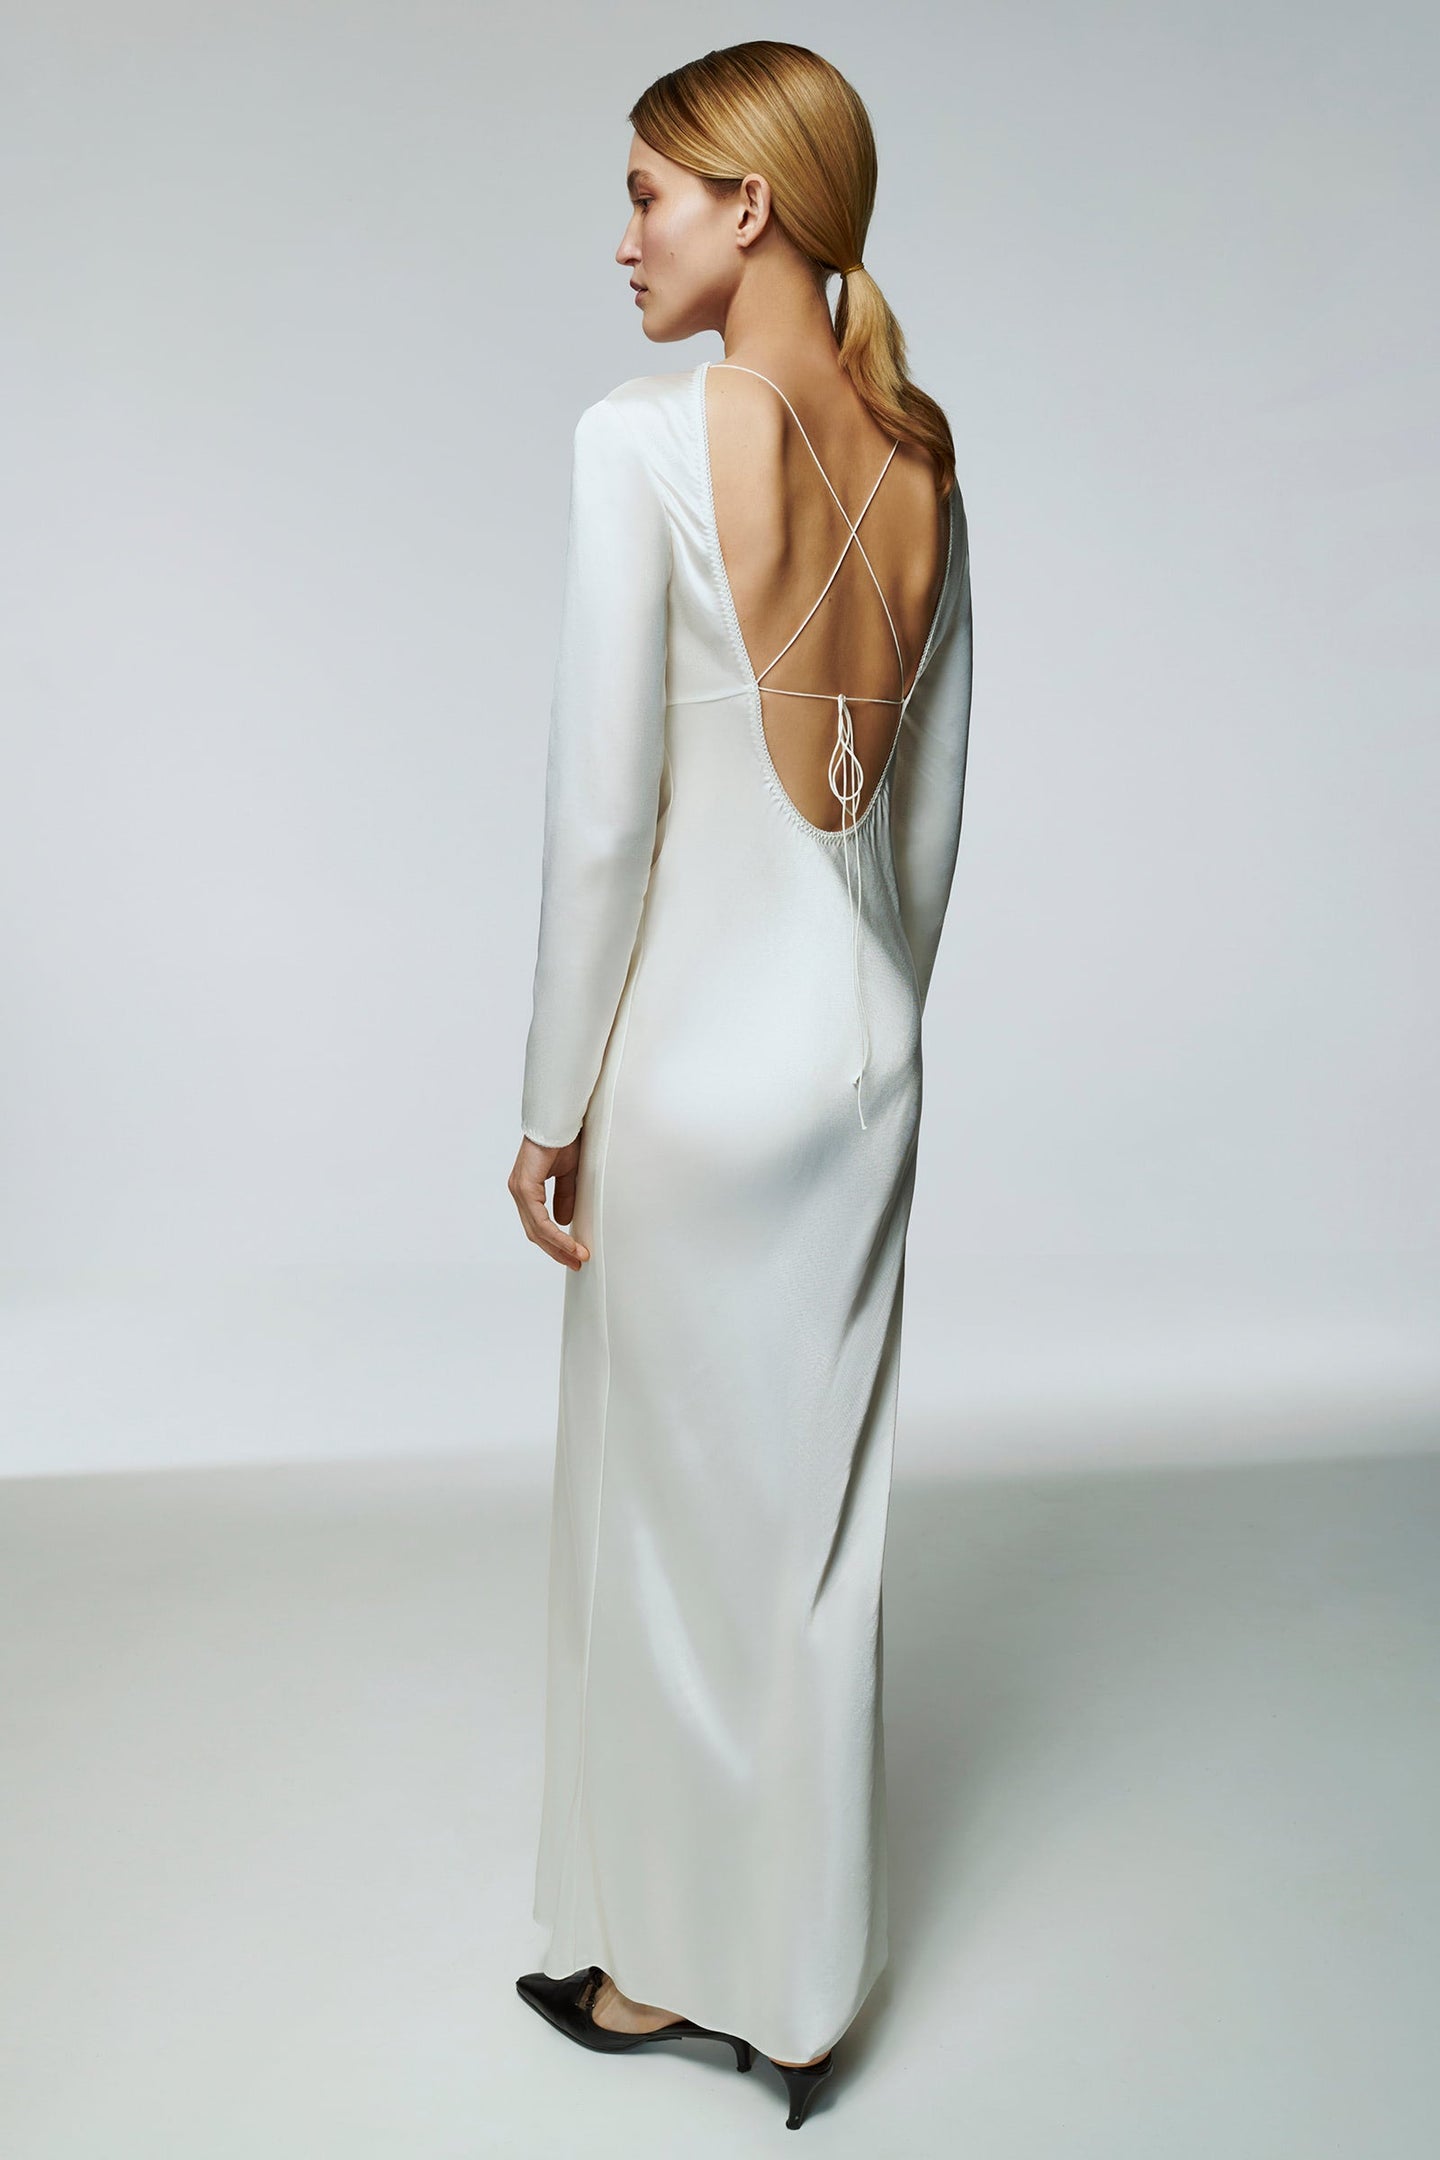 Model in ivory Sima dress